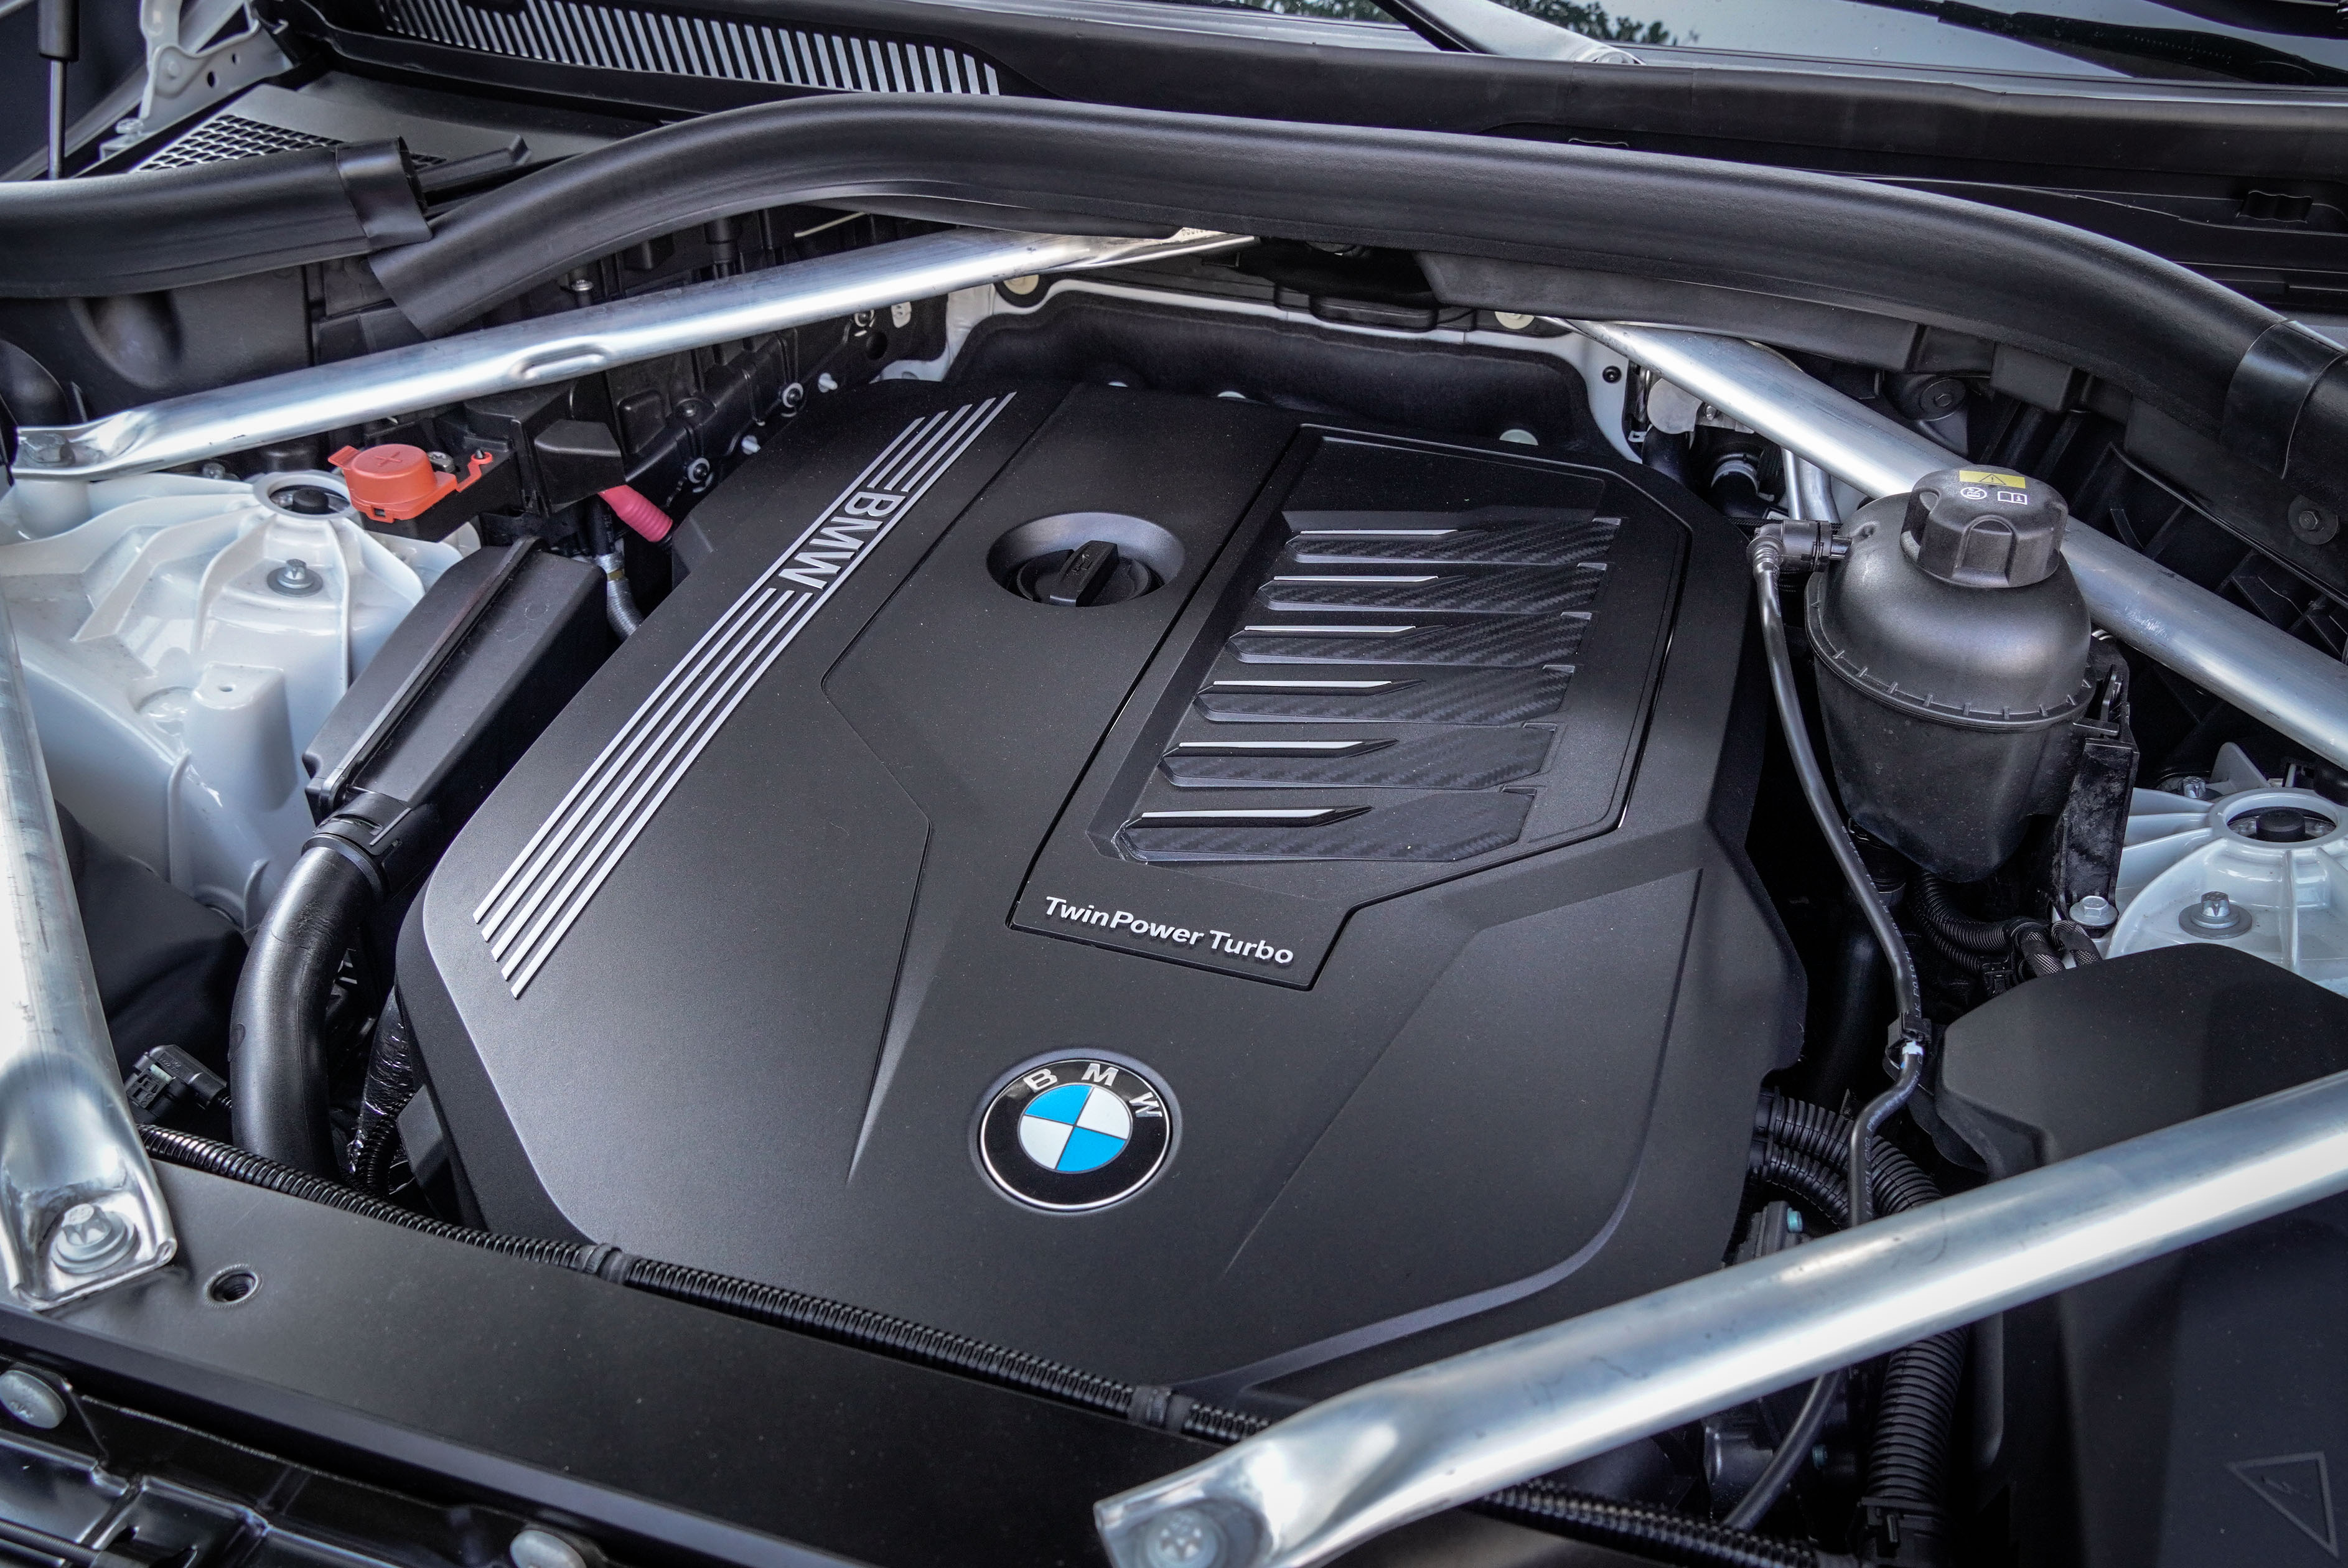 X6 xDrive40i 動力源自 3.0 升 TwinPower Turbo 直列六缸引擎。